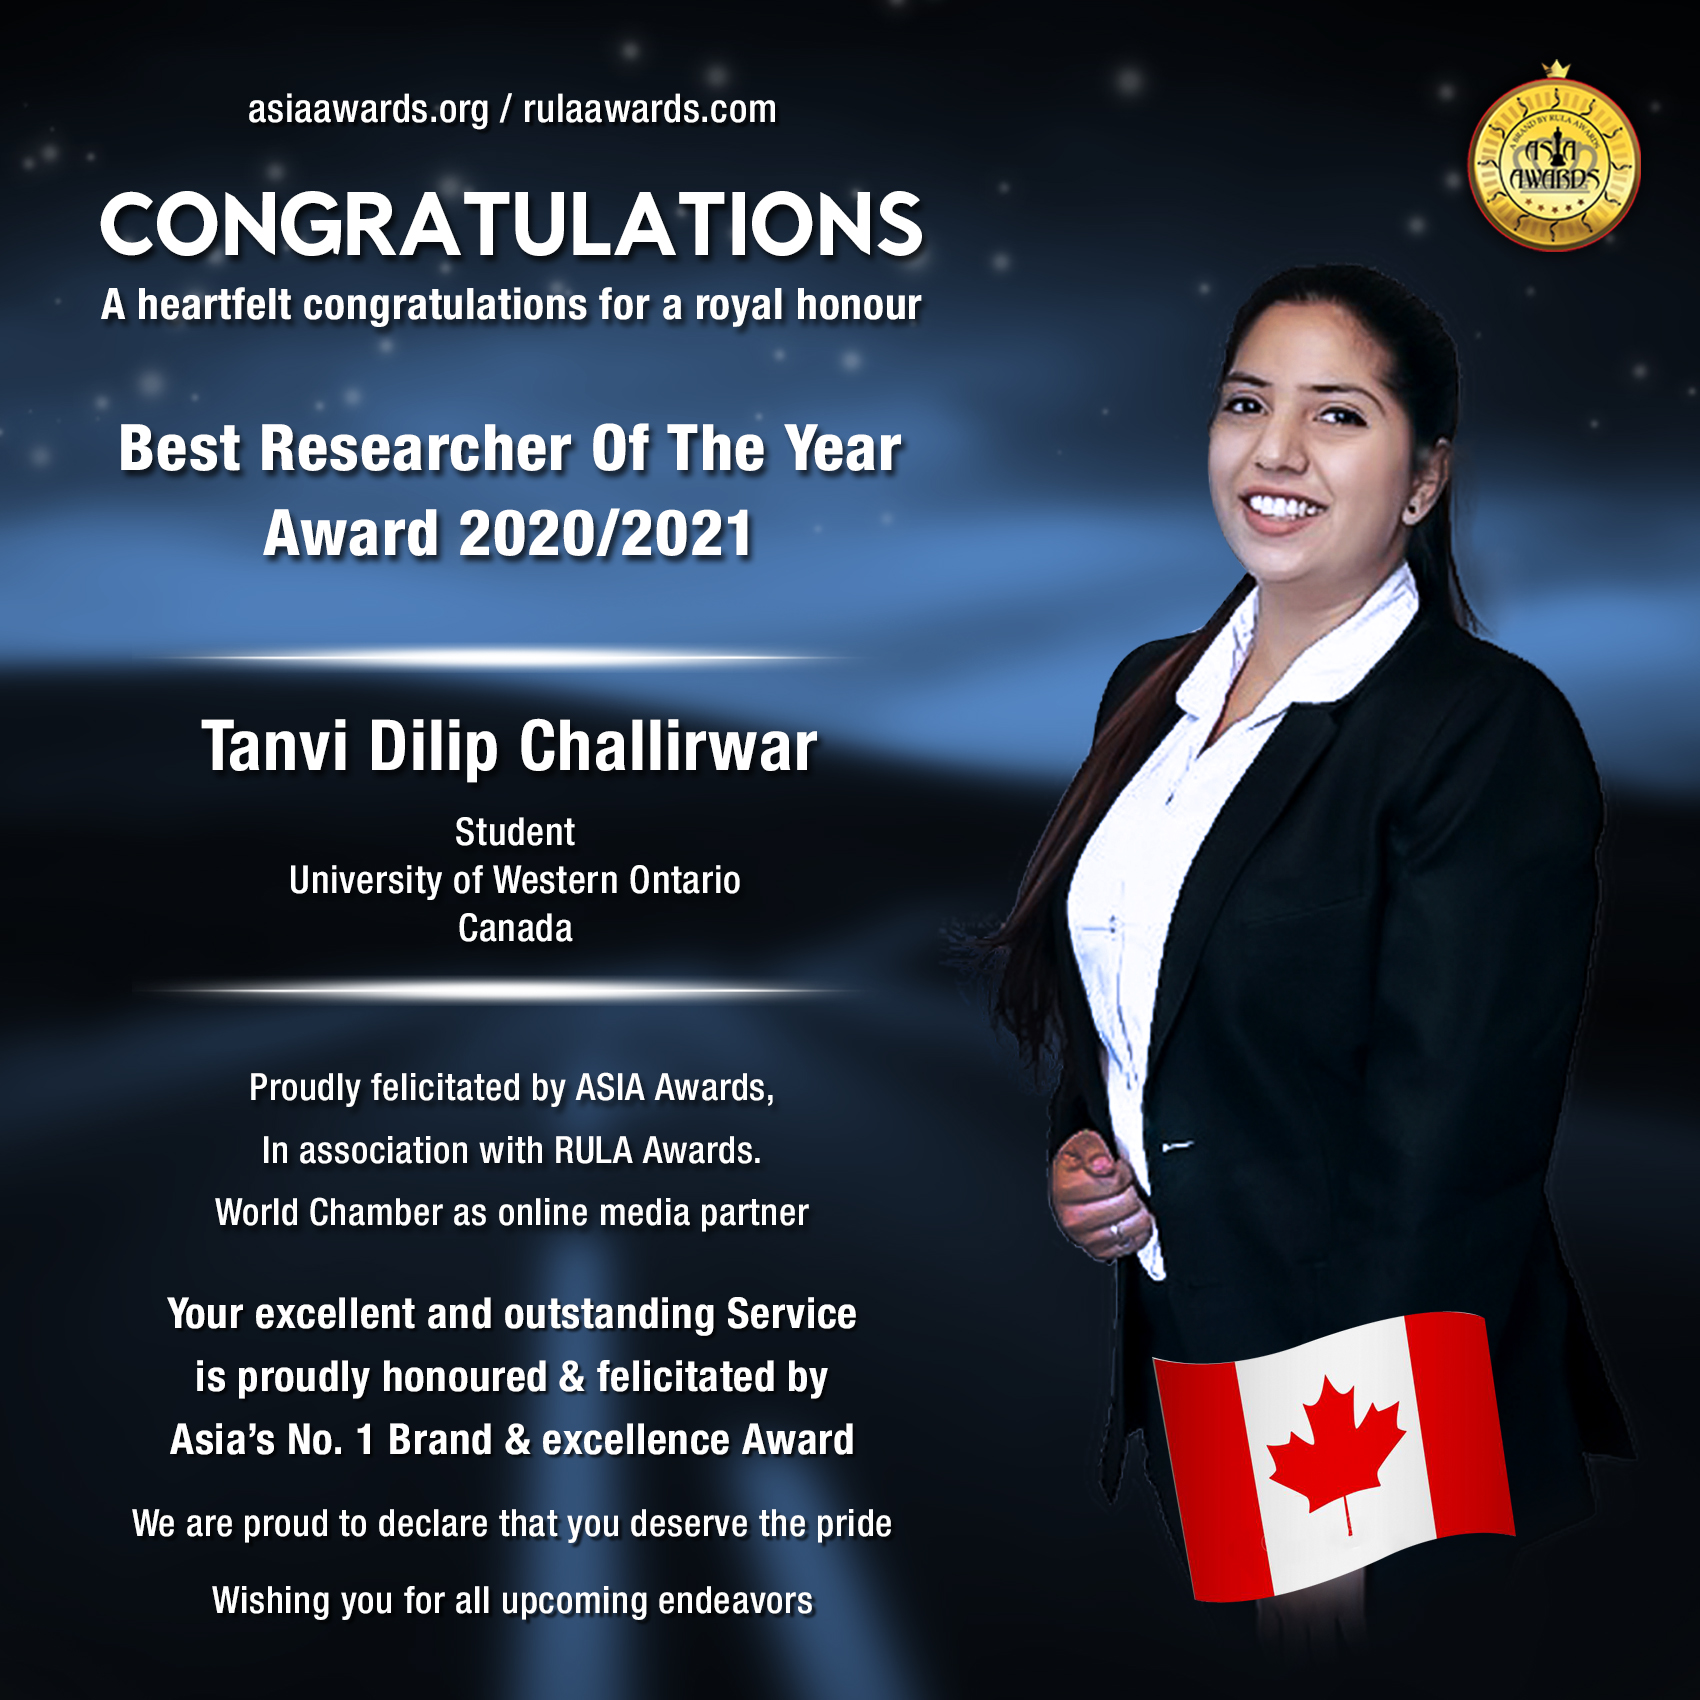 Tanvi Dilip Challirwar has bagged Best Researcher Of The Year